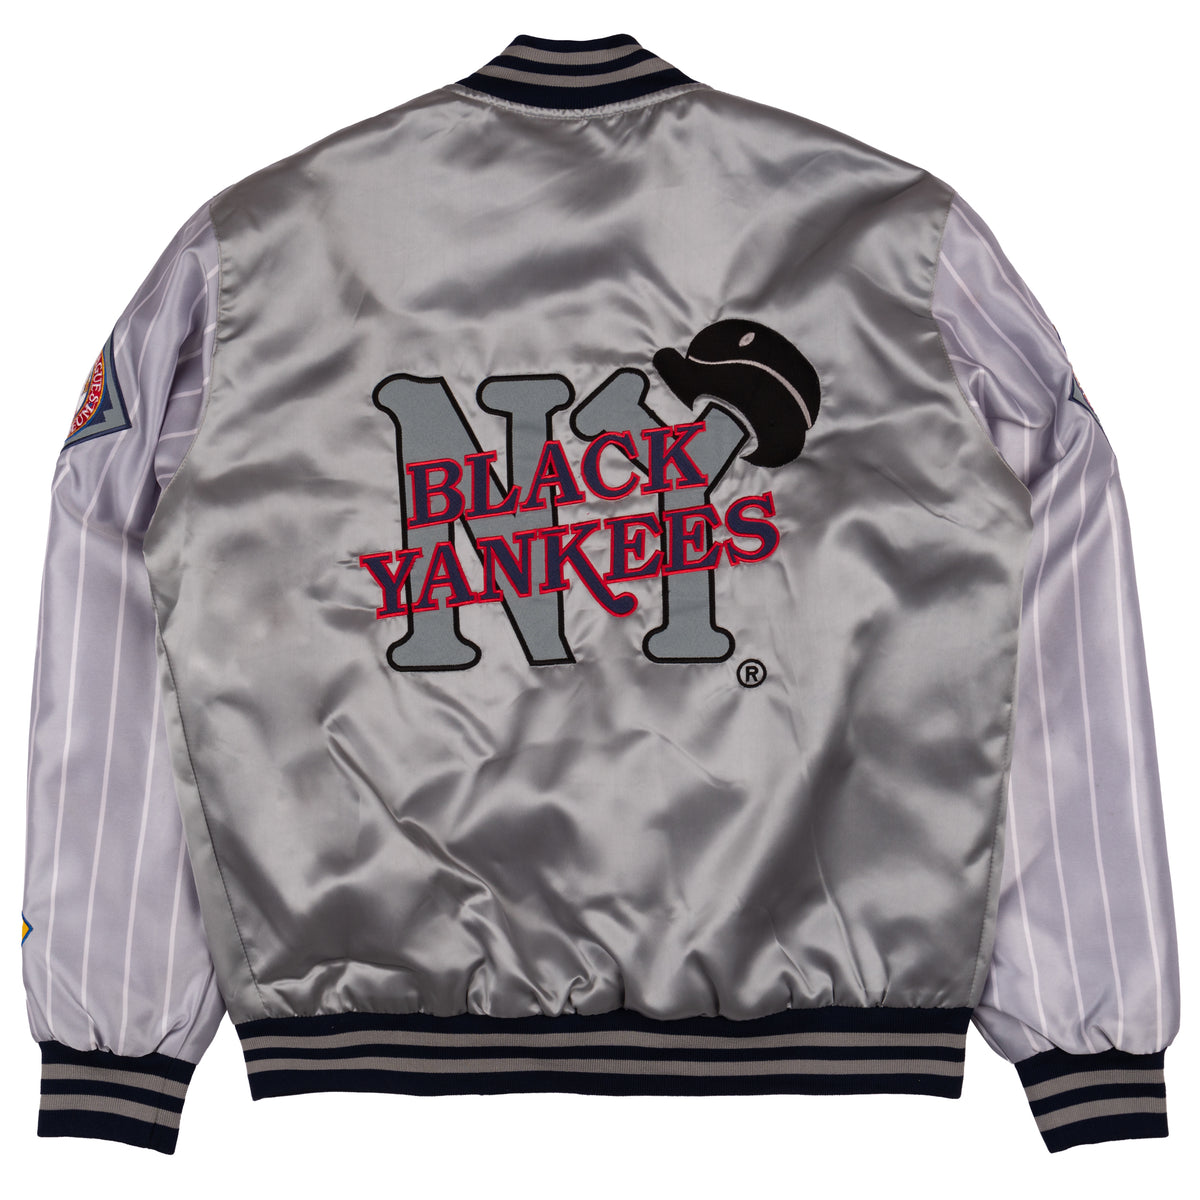 New York Black Yankees Jacket